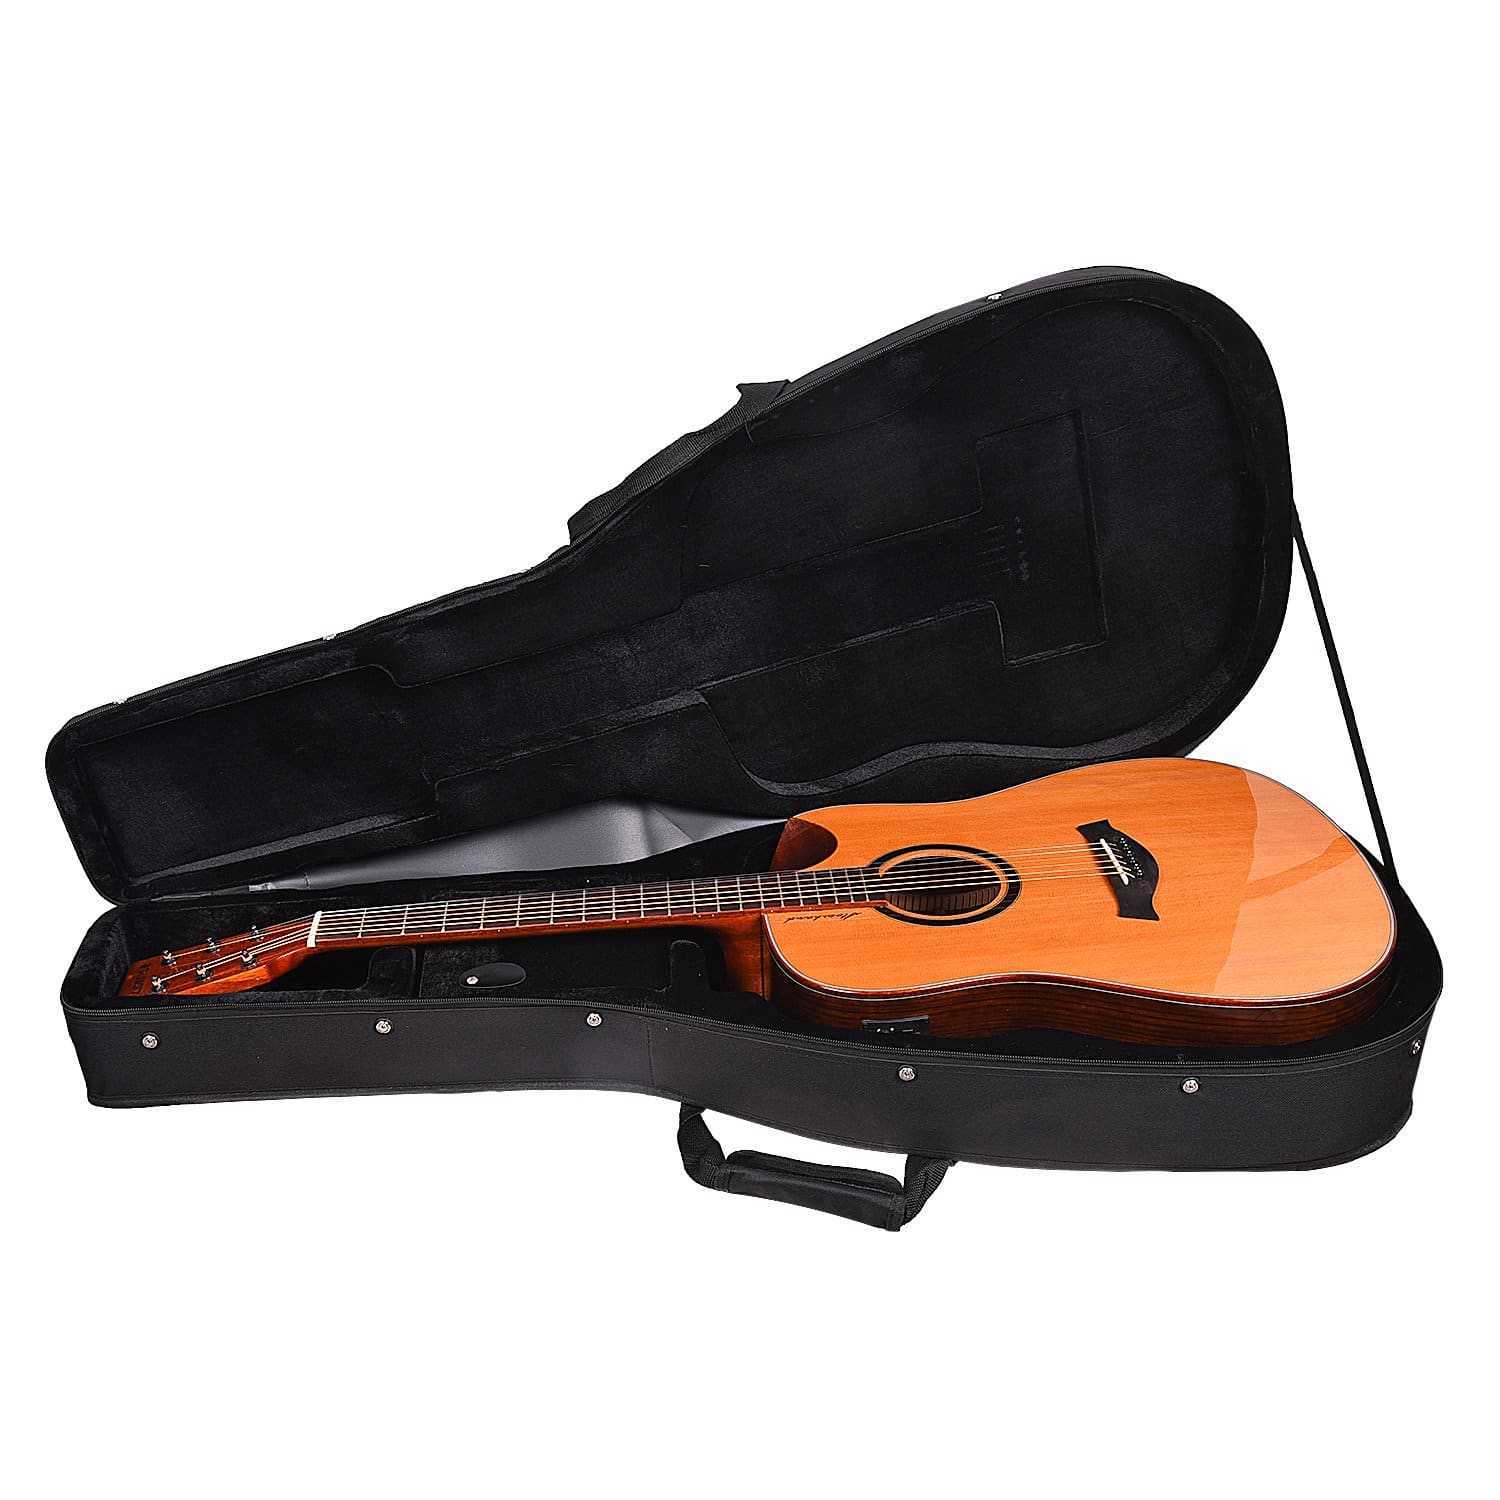 Kadence Acoustic guitar